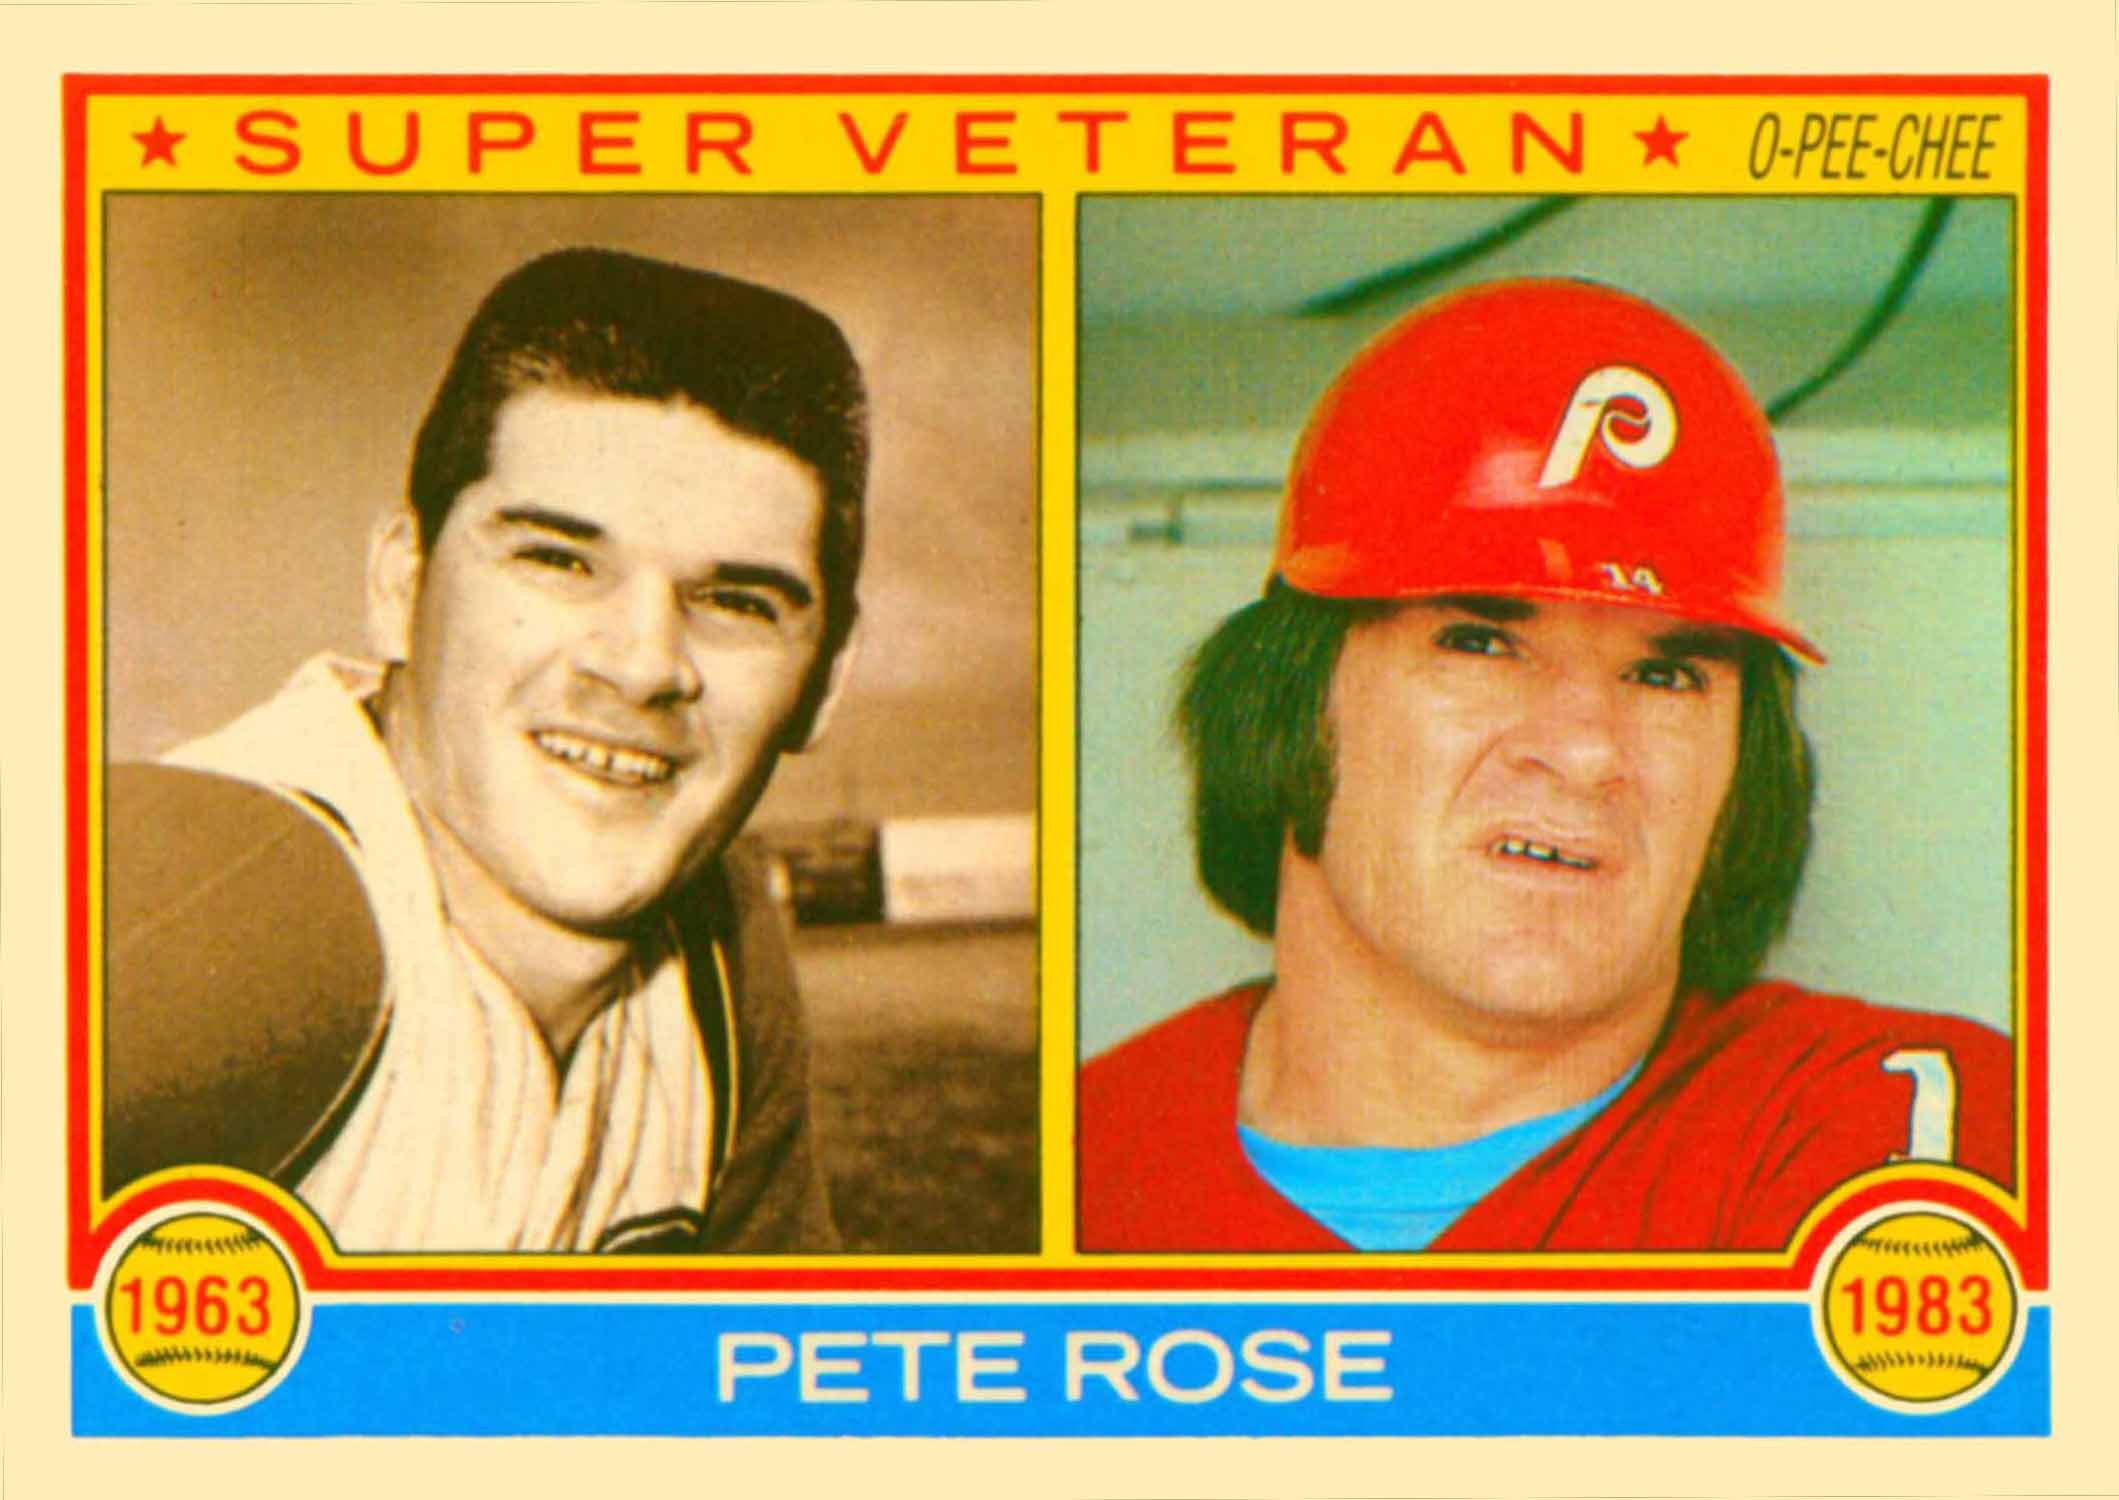 1983 O-Pee-Chee Super Veteran